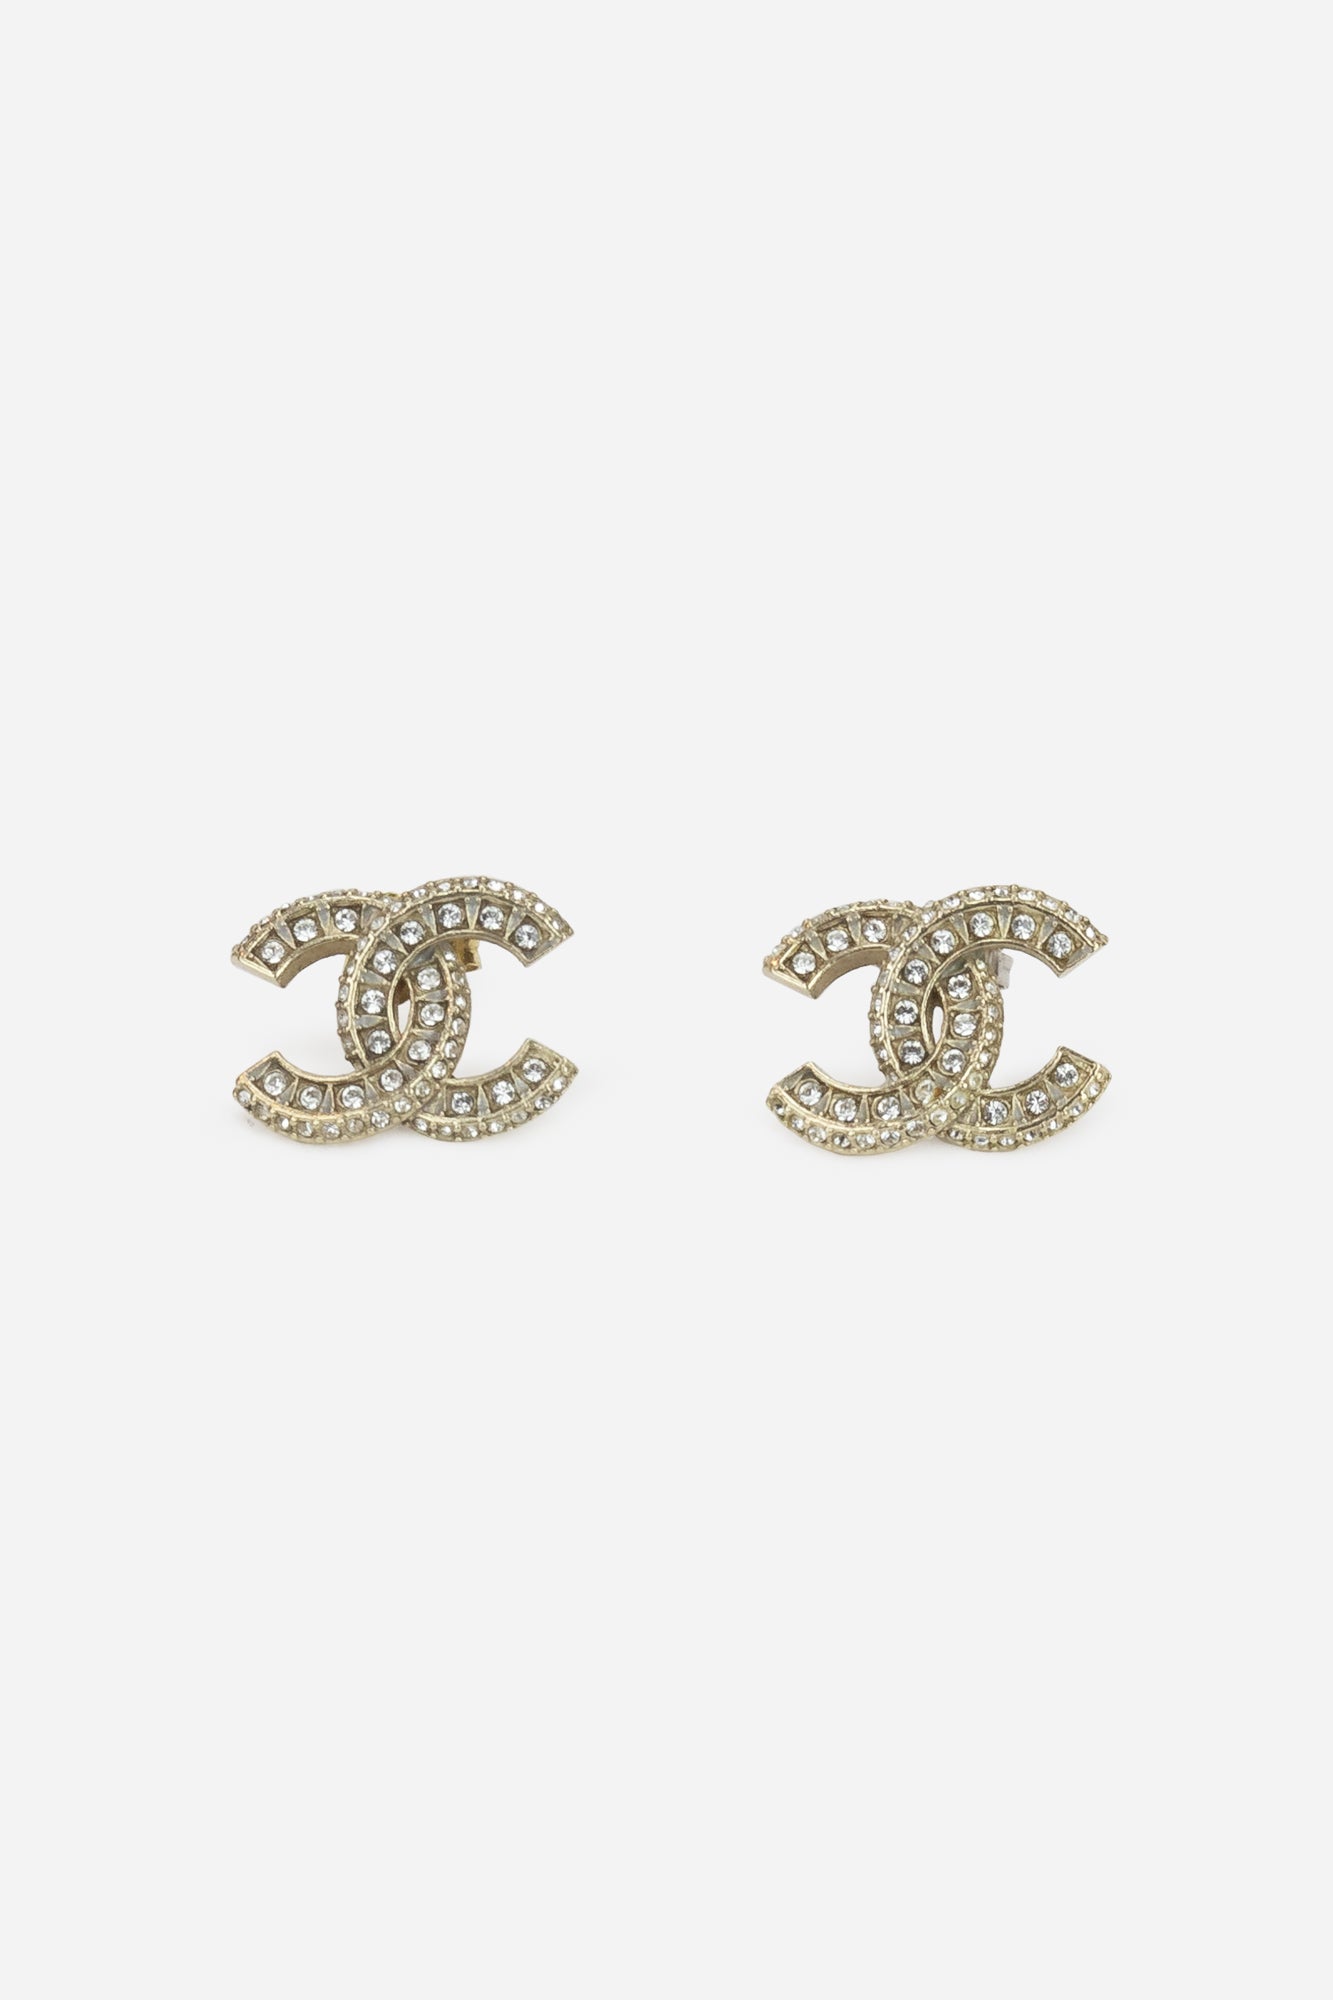 Gold Crystal CC earrings crystal/gold tone metal